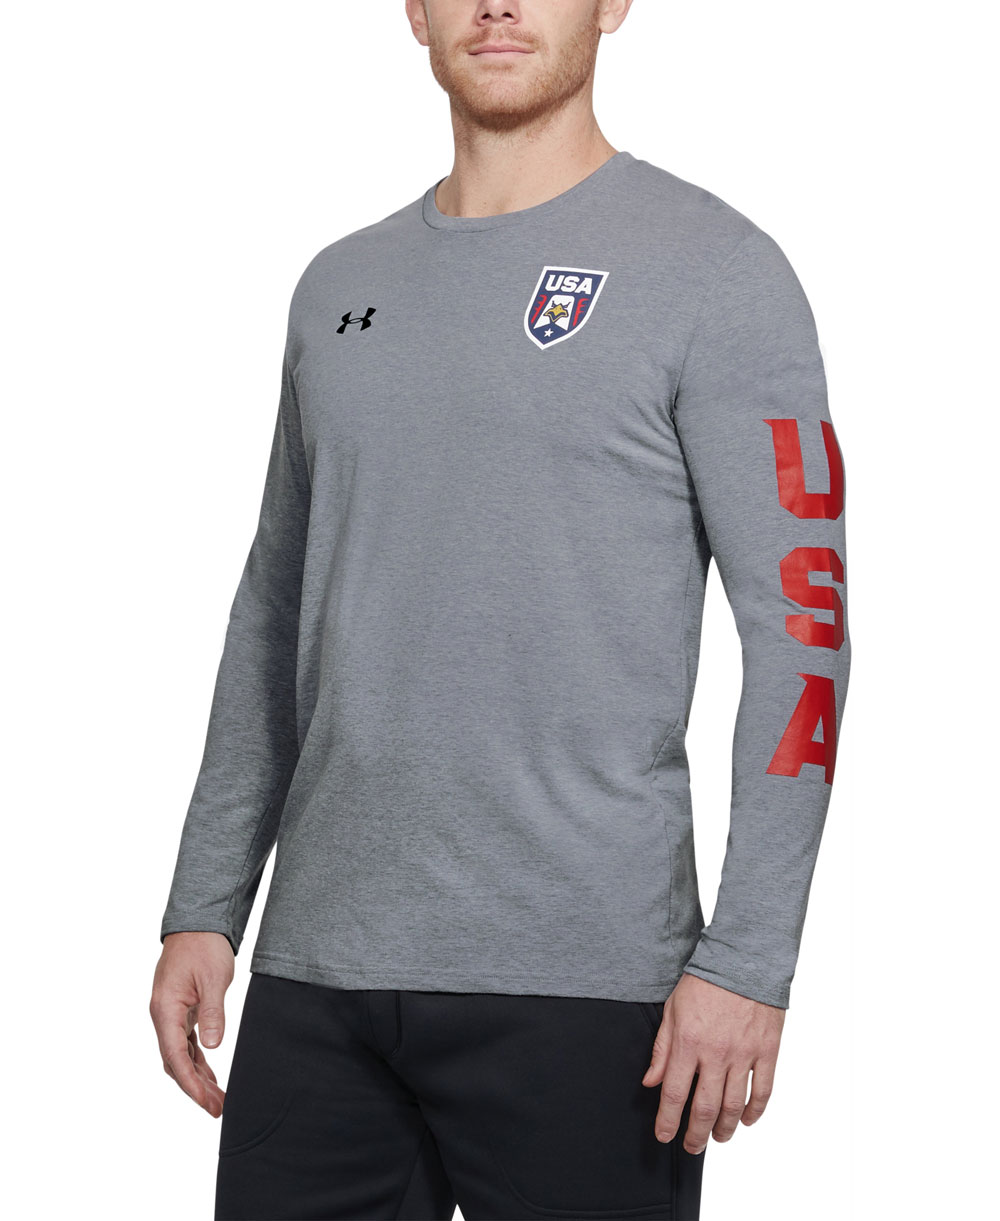 Under Armour USA Patriot Camiseta Manga Larga para Hombre Steel Lig